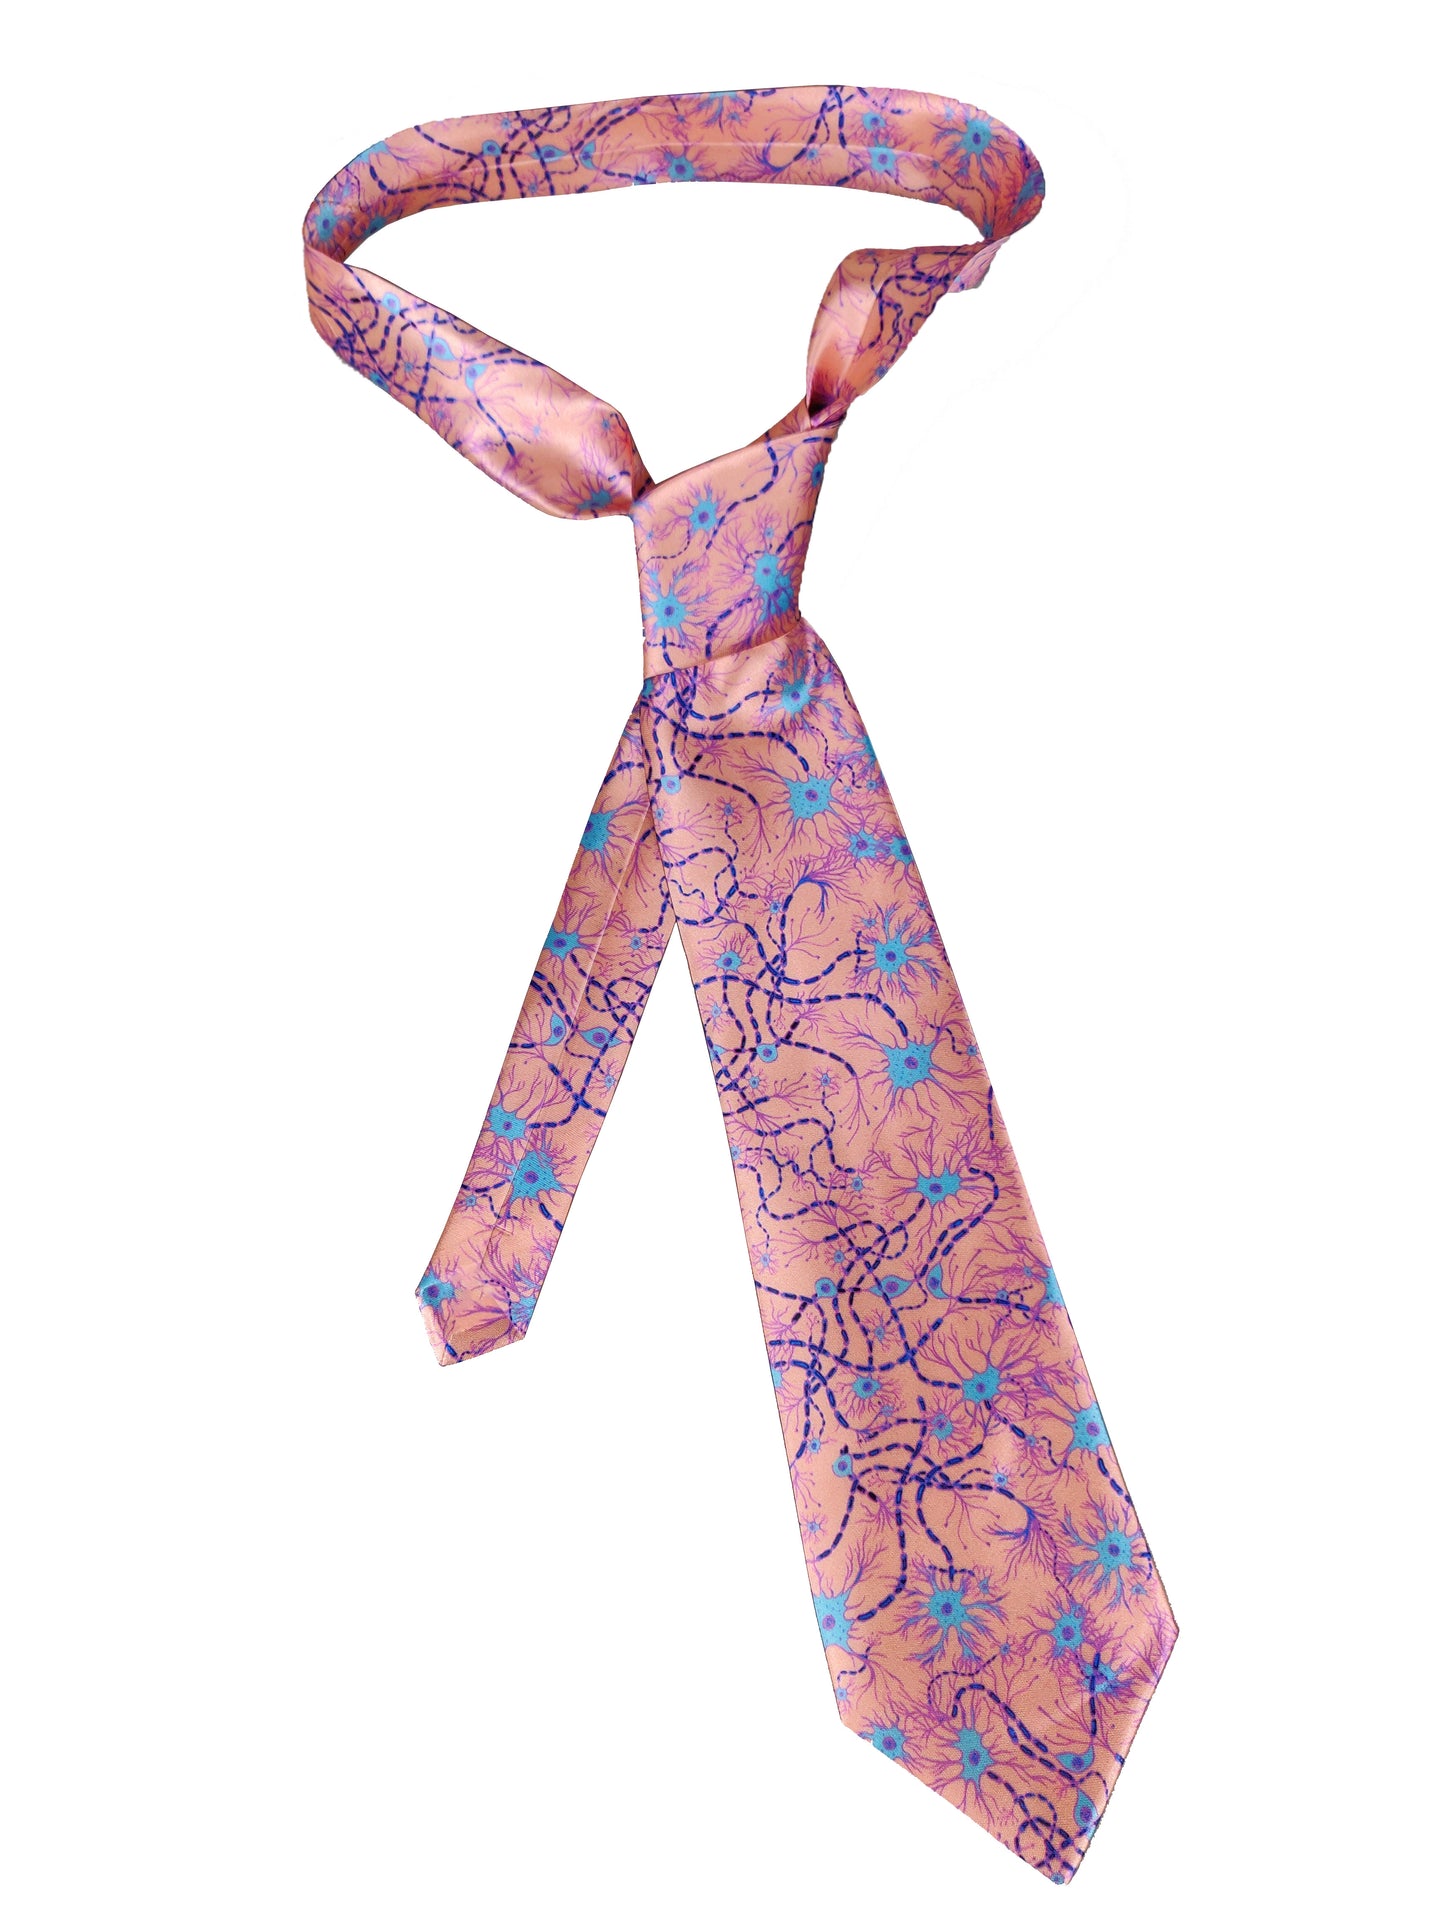 Neurons Pattern Tie (Rose) A (UK Stock)